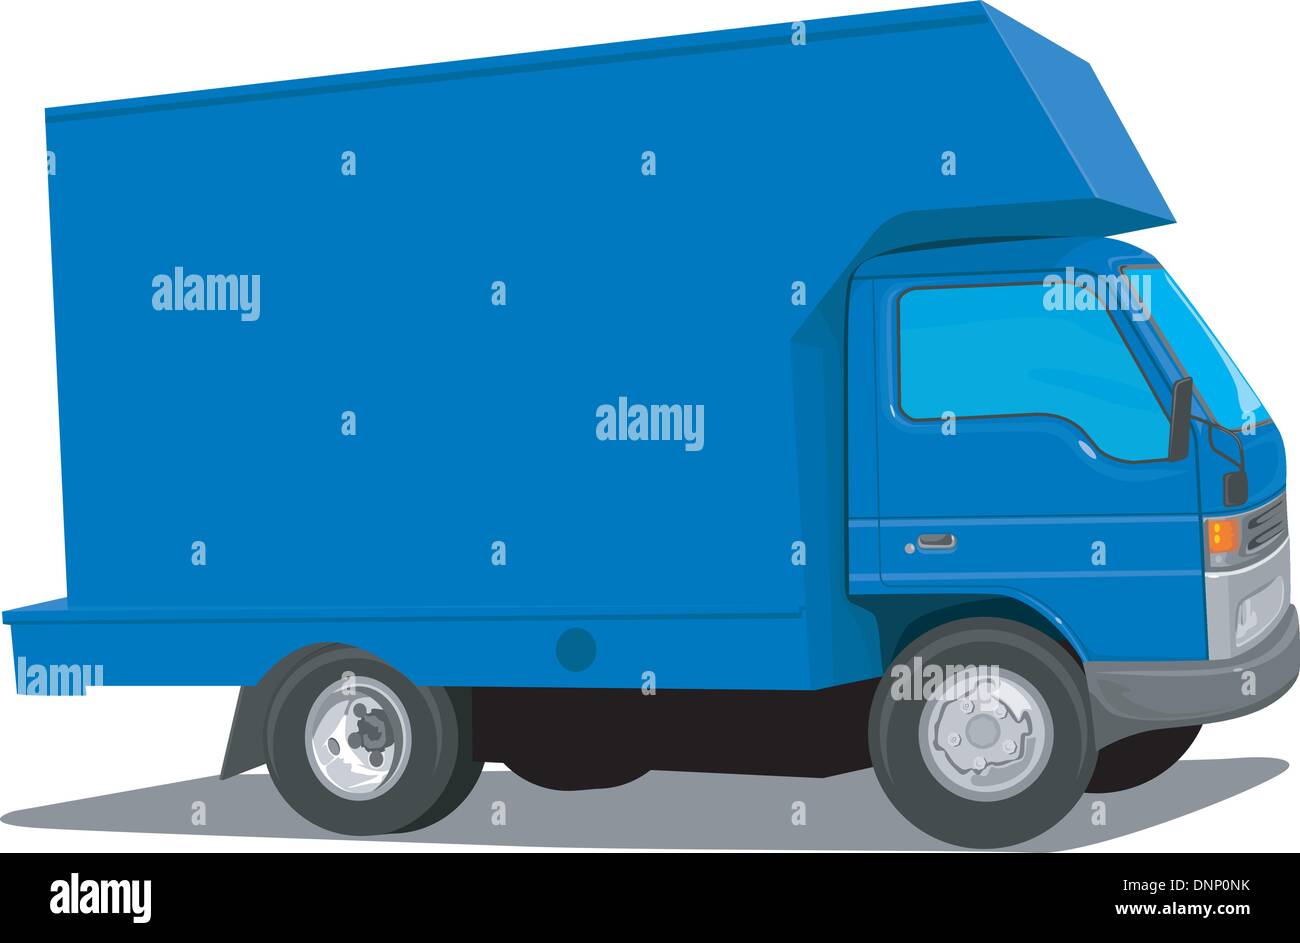 Camion Scania Bleu - Caricature Auto Moto